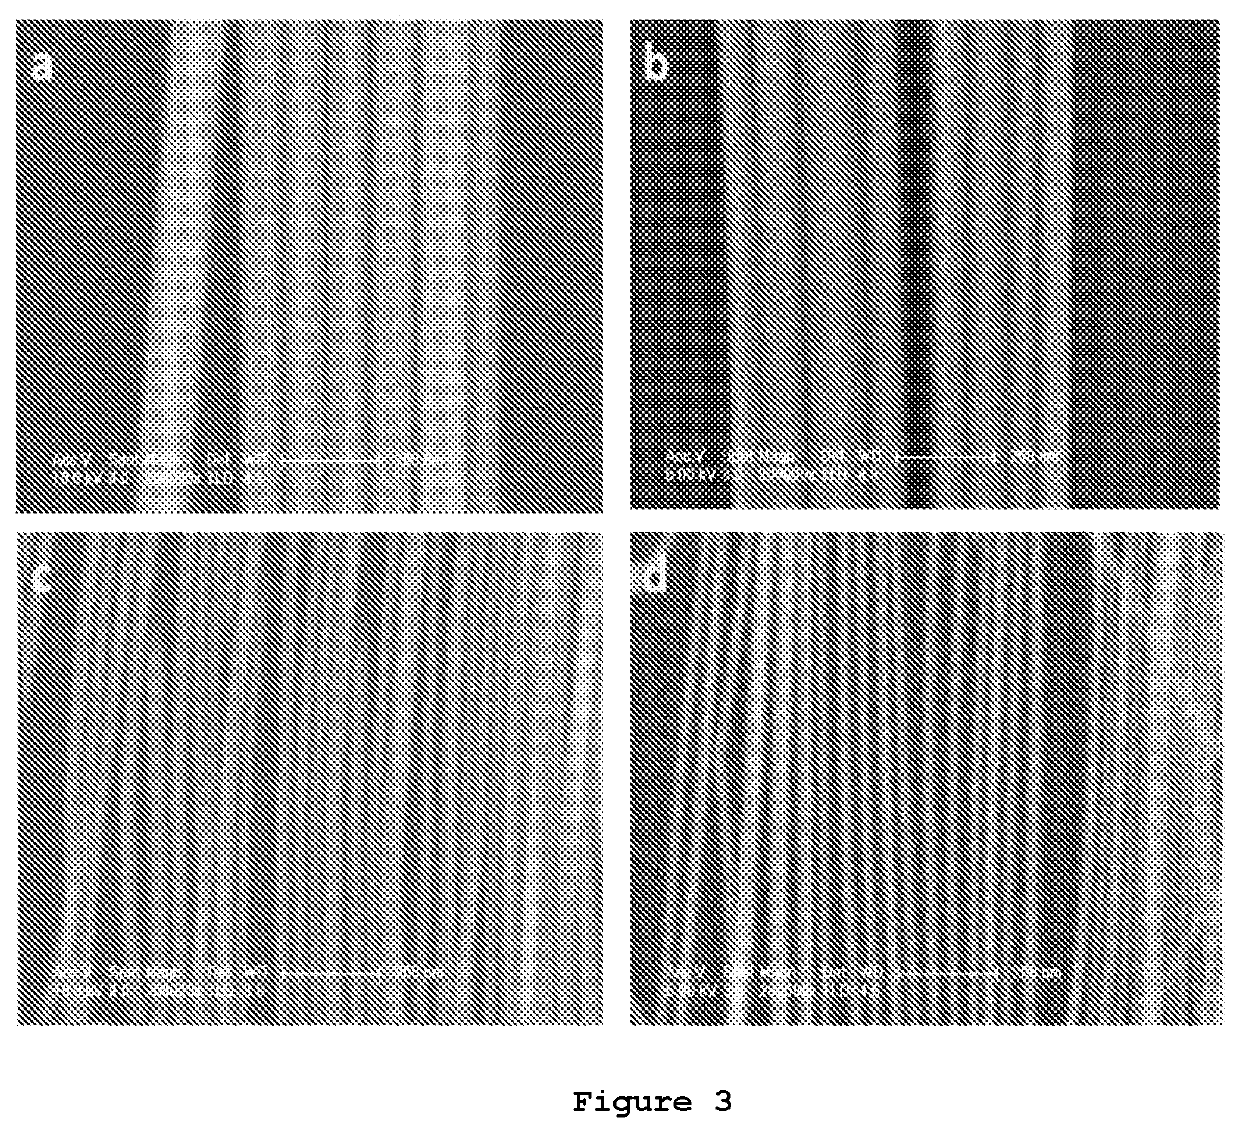 Method for preparation of metal nanowires